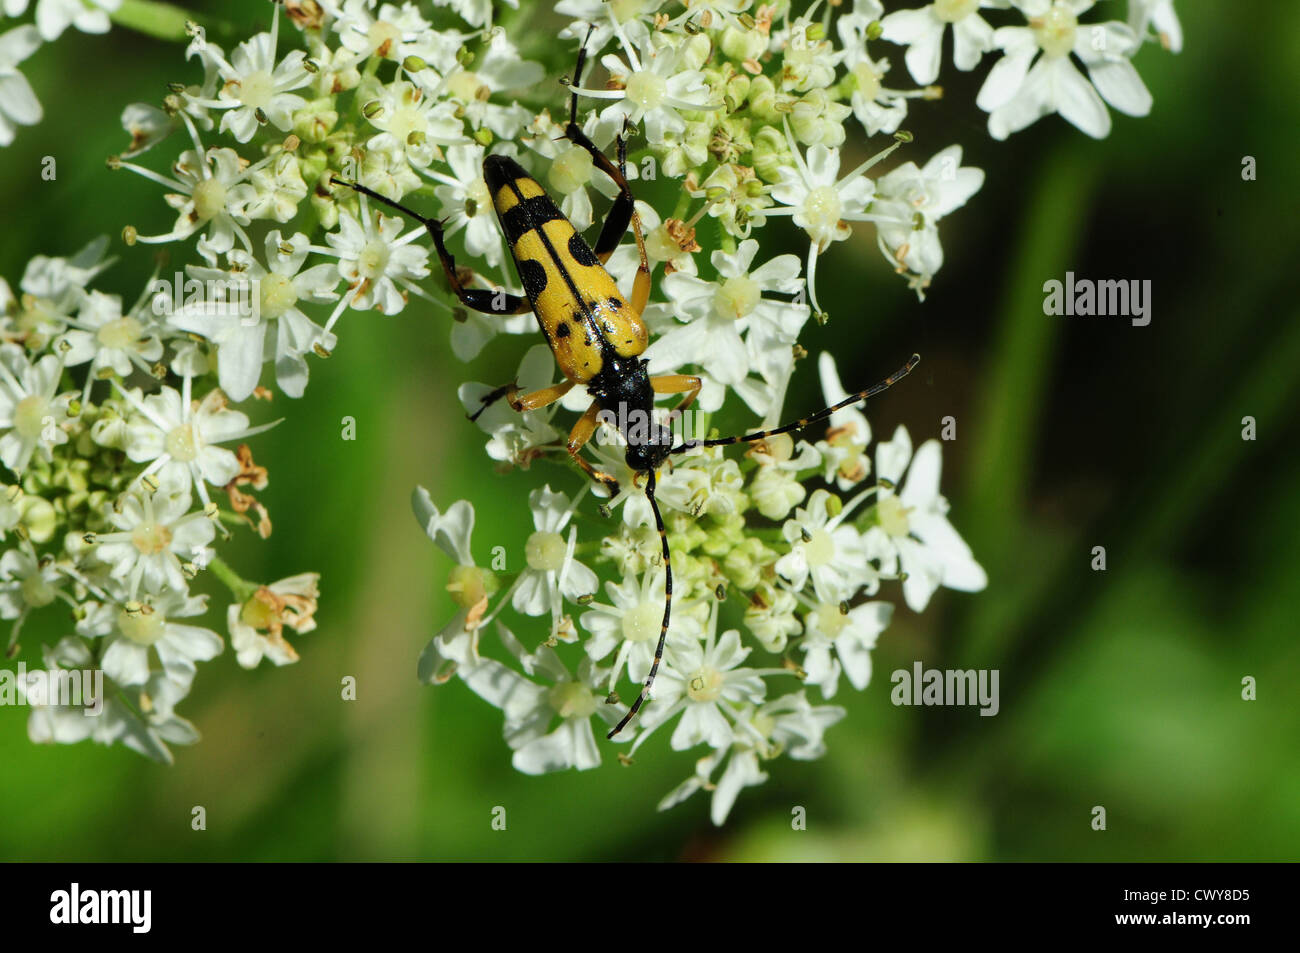 Beetle Strangalia Maculata feeding on flower of Hogweed Heracleum sphondylium. Stock Photo